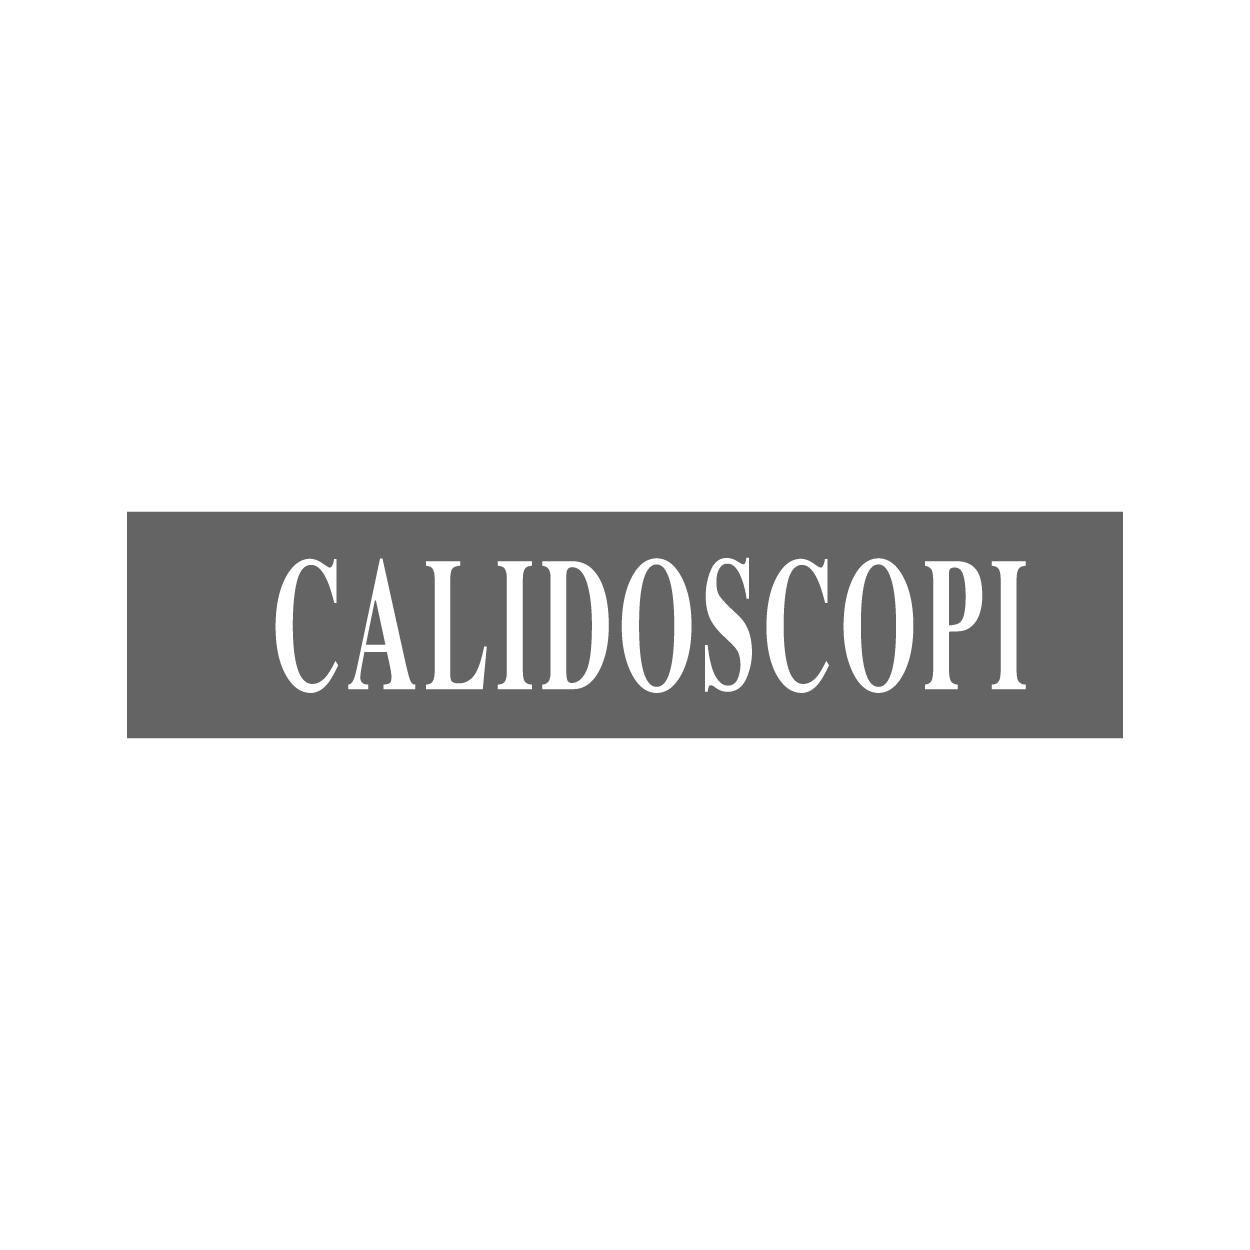 logo_Calidoscopi.png